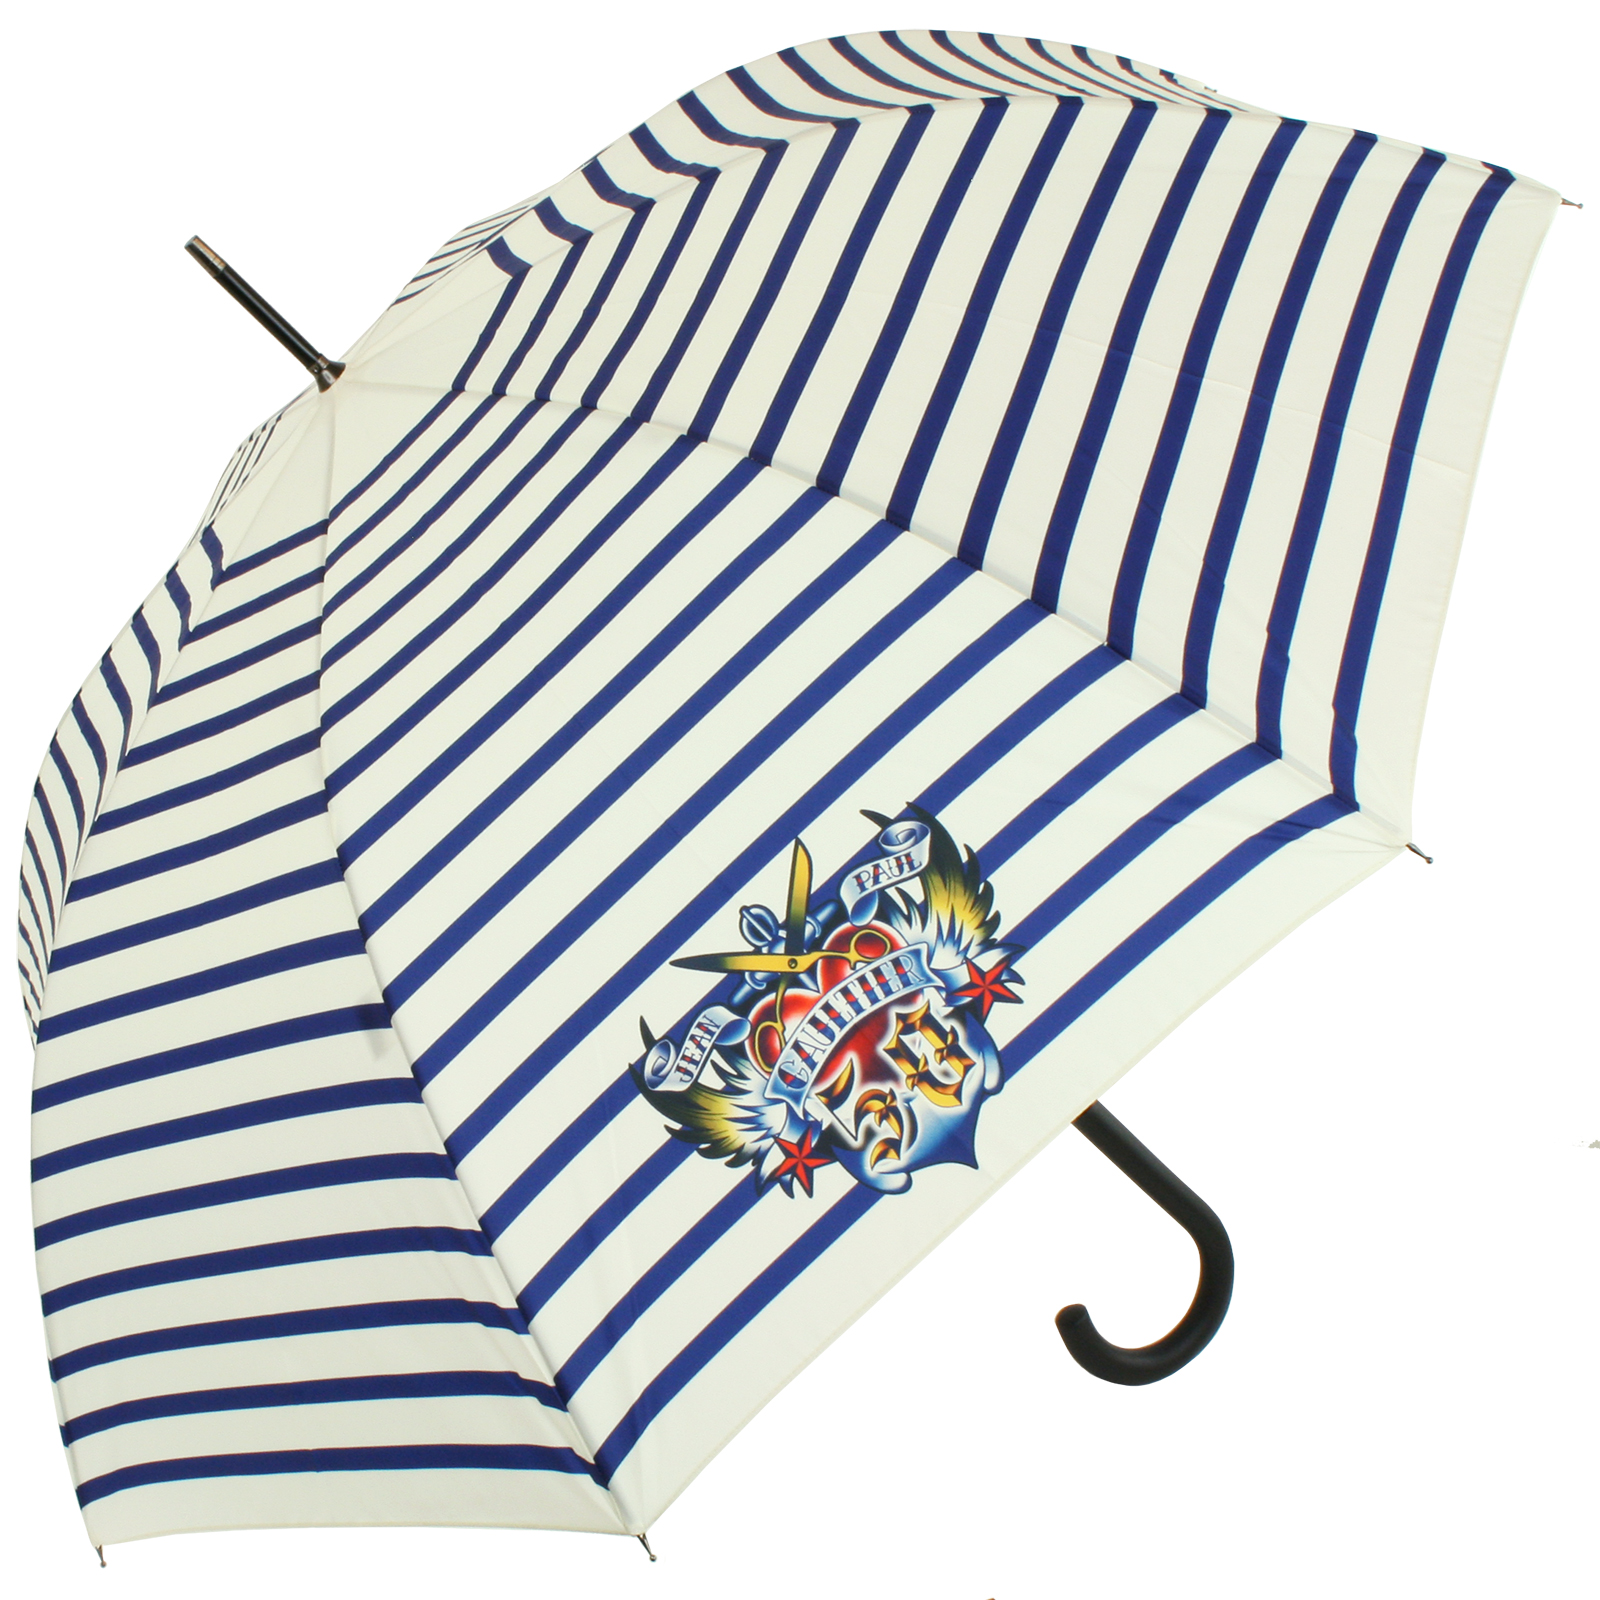 Tattoo Stripe 50th Anniversary Umbrella by Jean Paul Gaultier